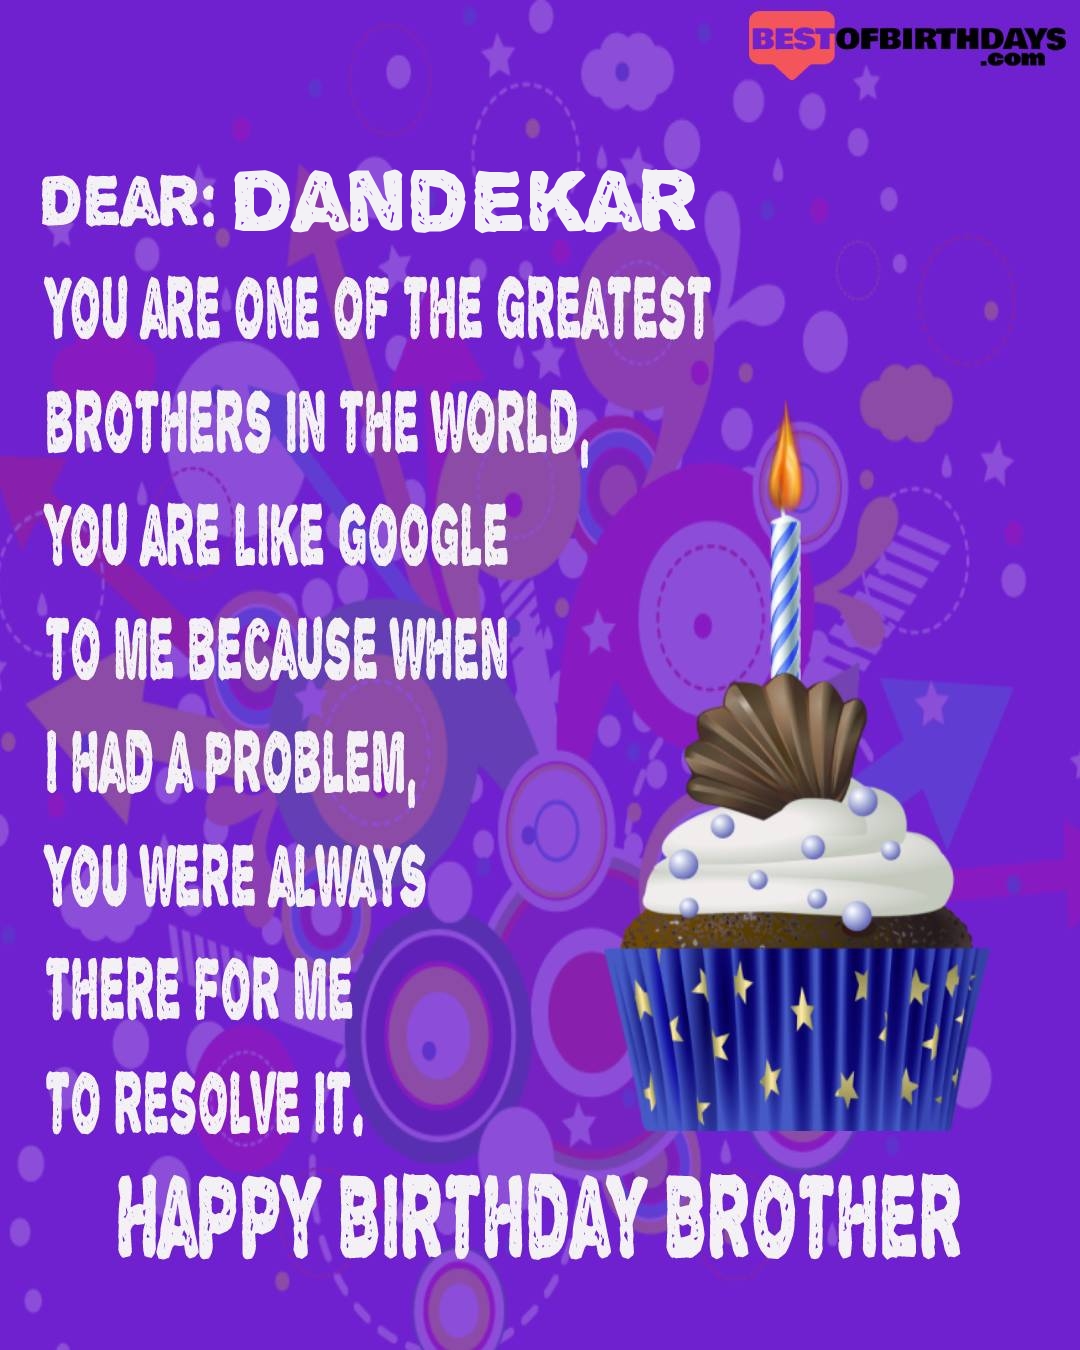 Happy birthday dandekar bhai brother bro